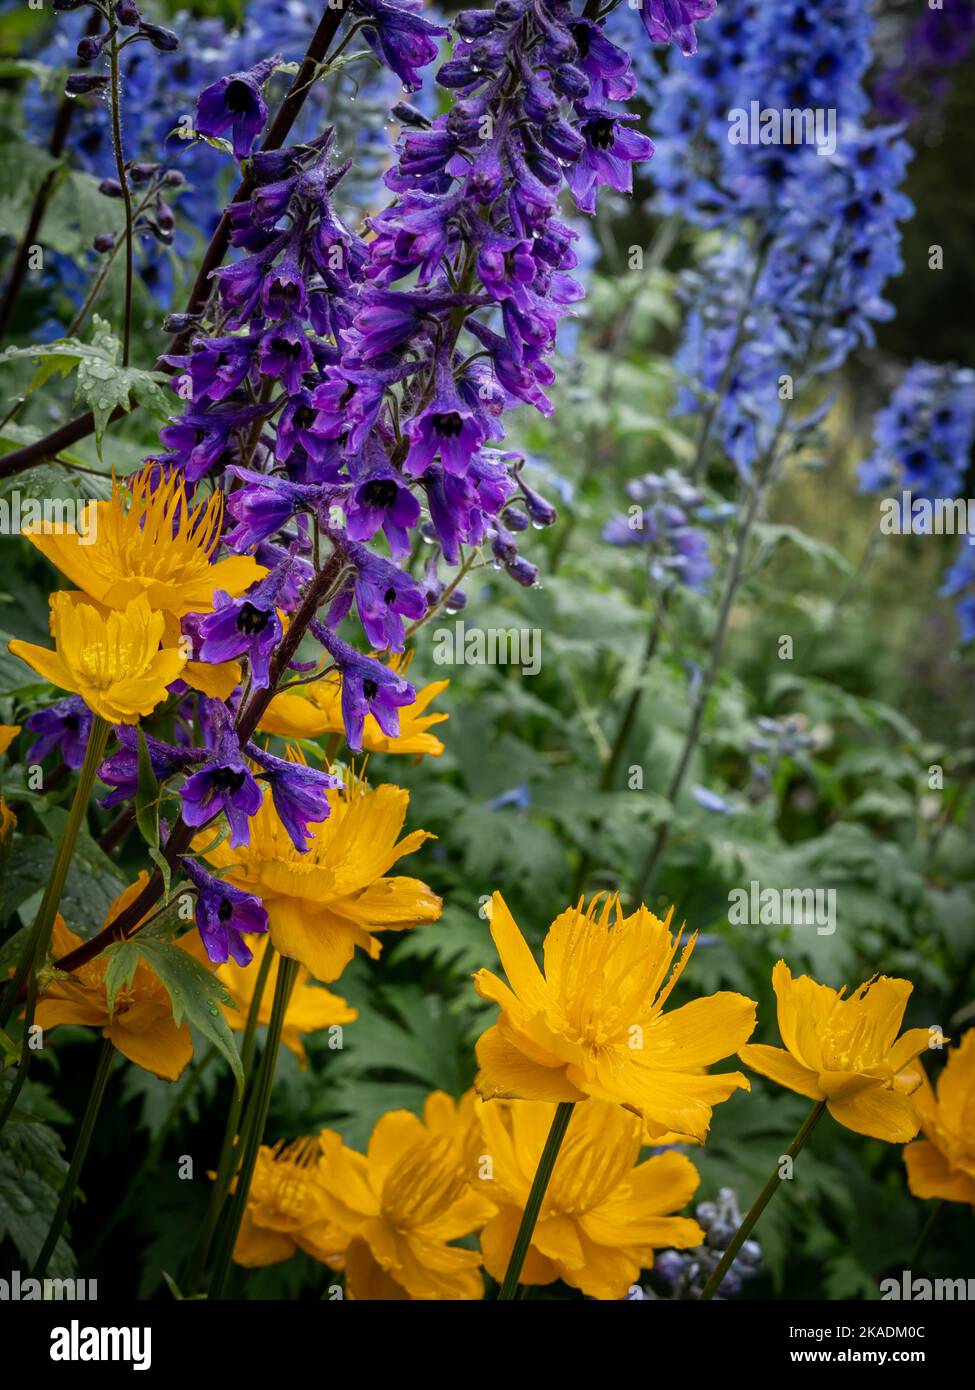 Blue flowers of Delphinium dictiocarpum (larkspur) and orange flowers of Golden Queen (globeflower, Trollius ledebouri), blooming in the garden. Stock Photo